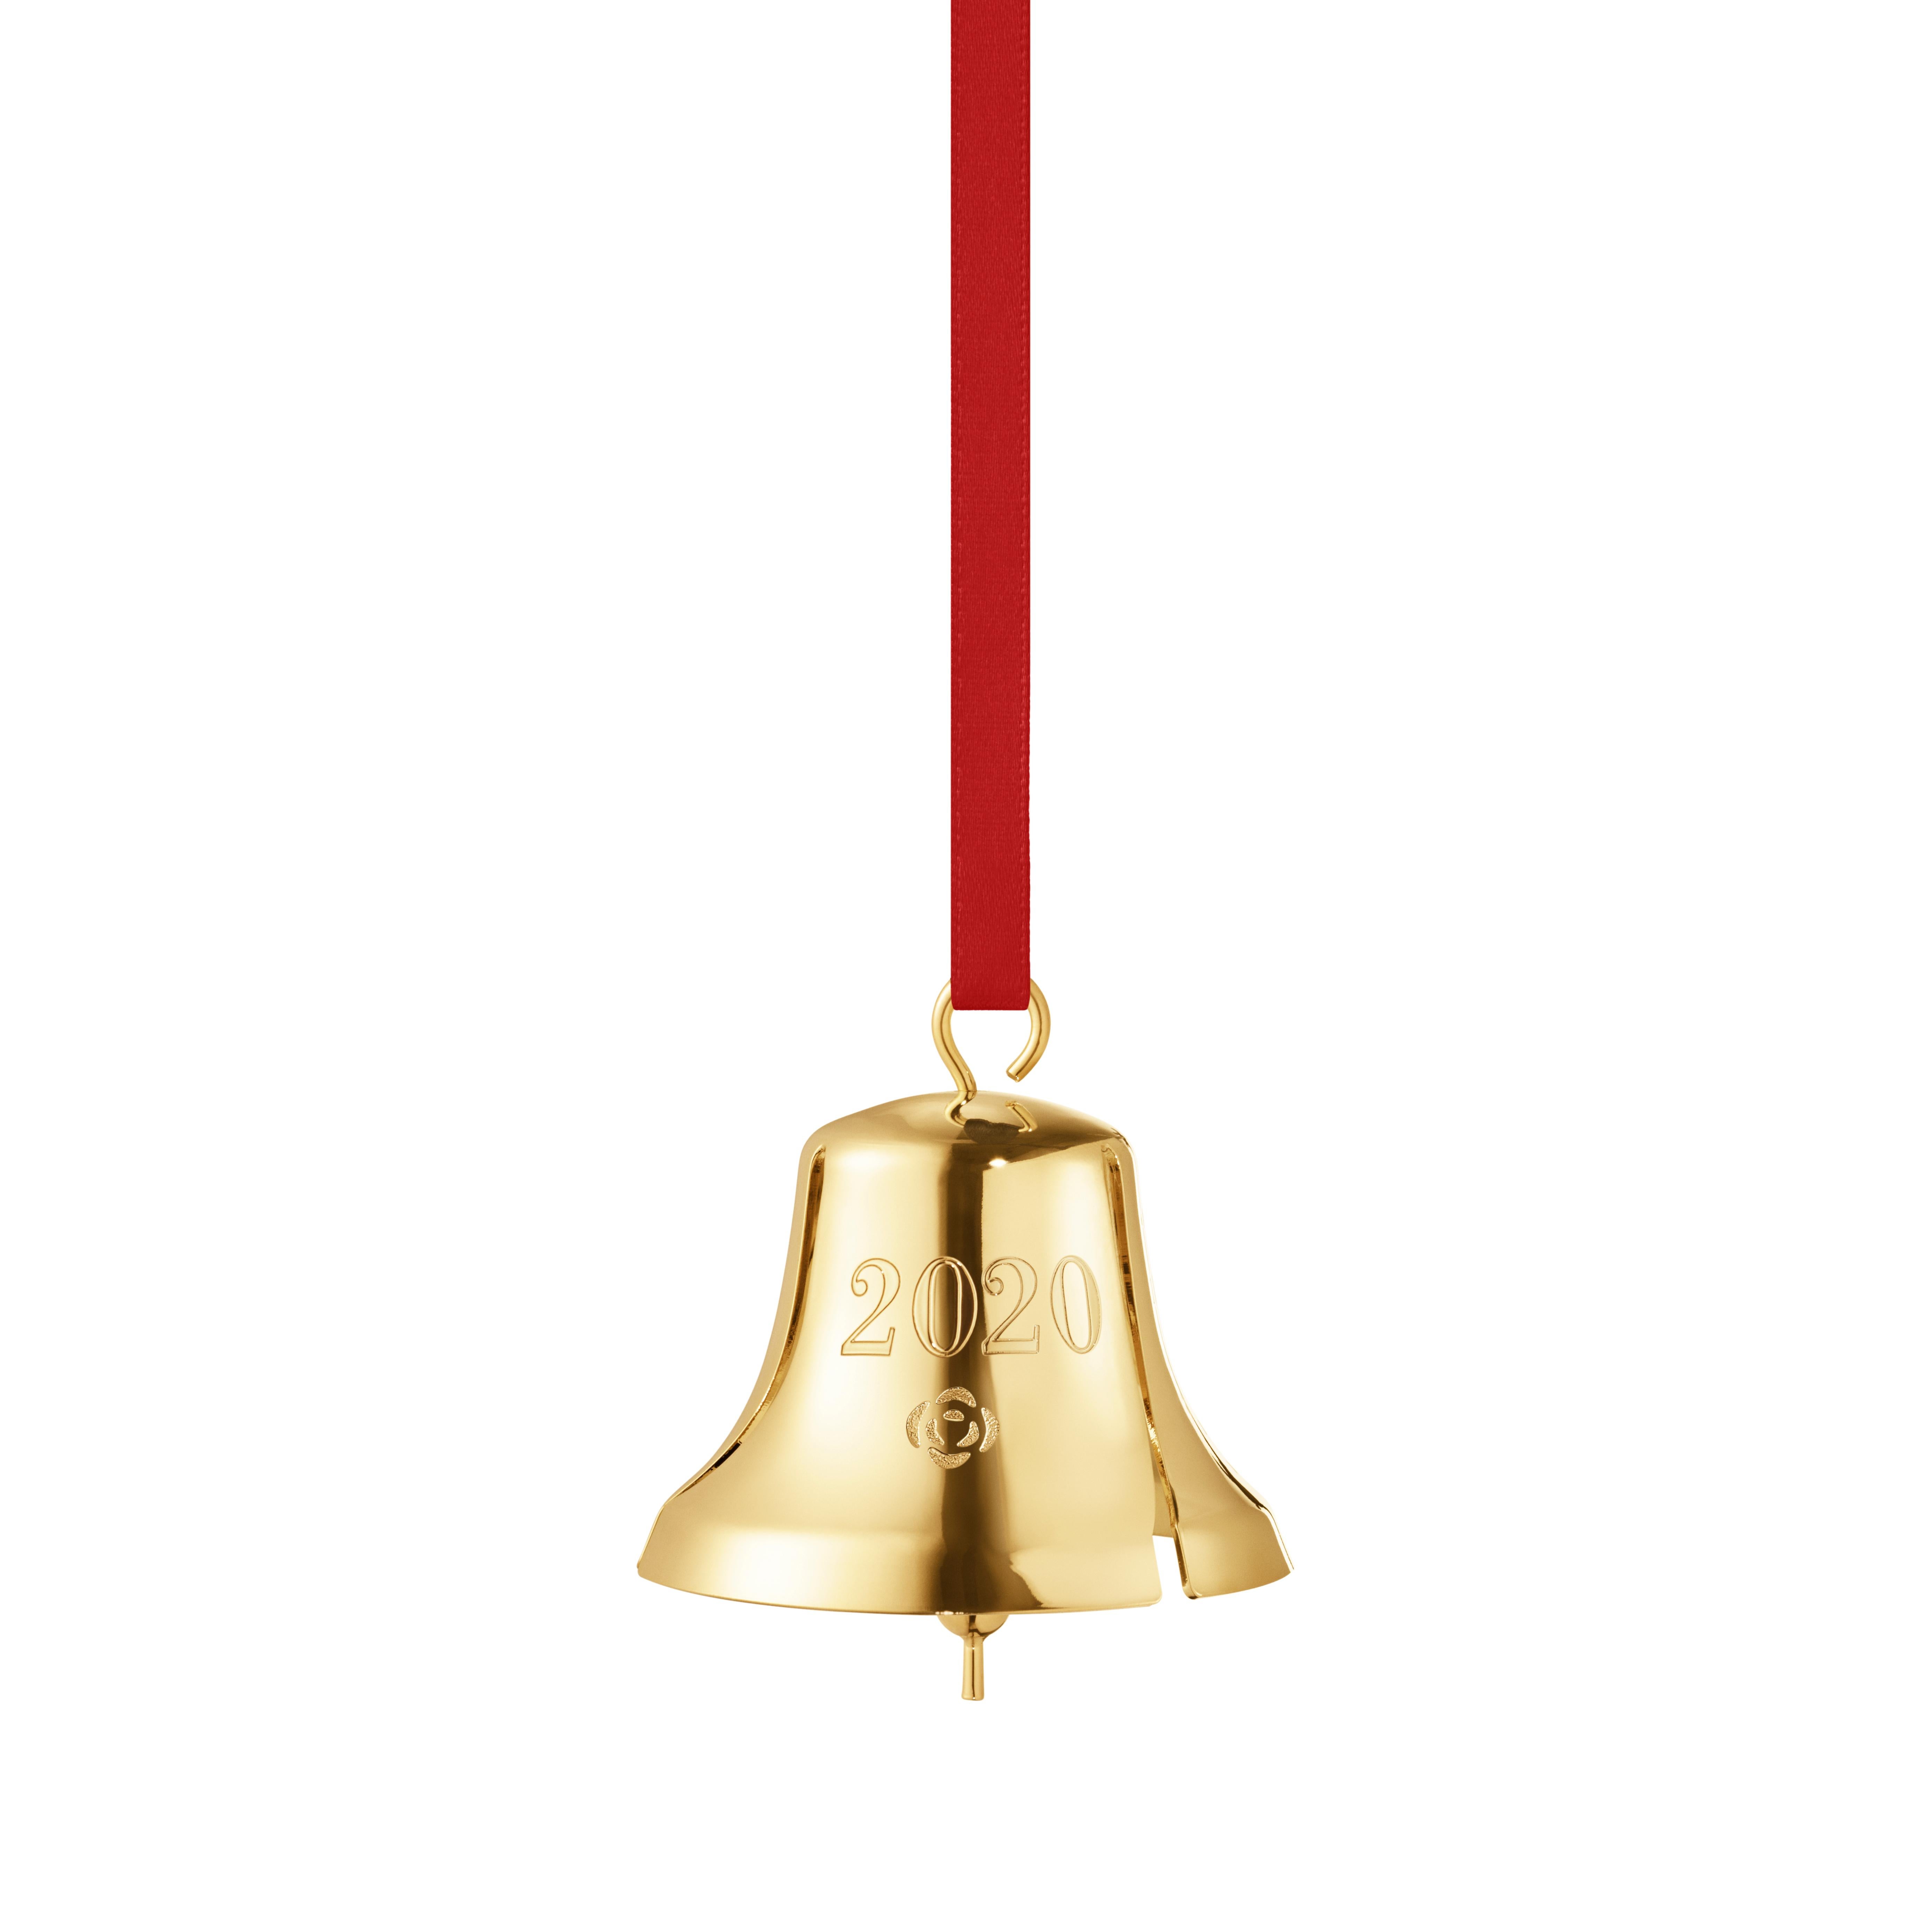 Christmas 2020 Bell,18 kt gold plated brass
 